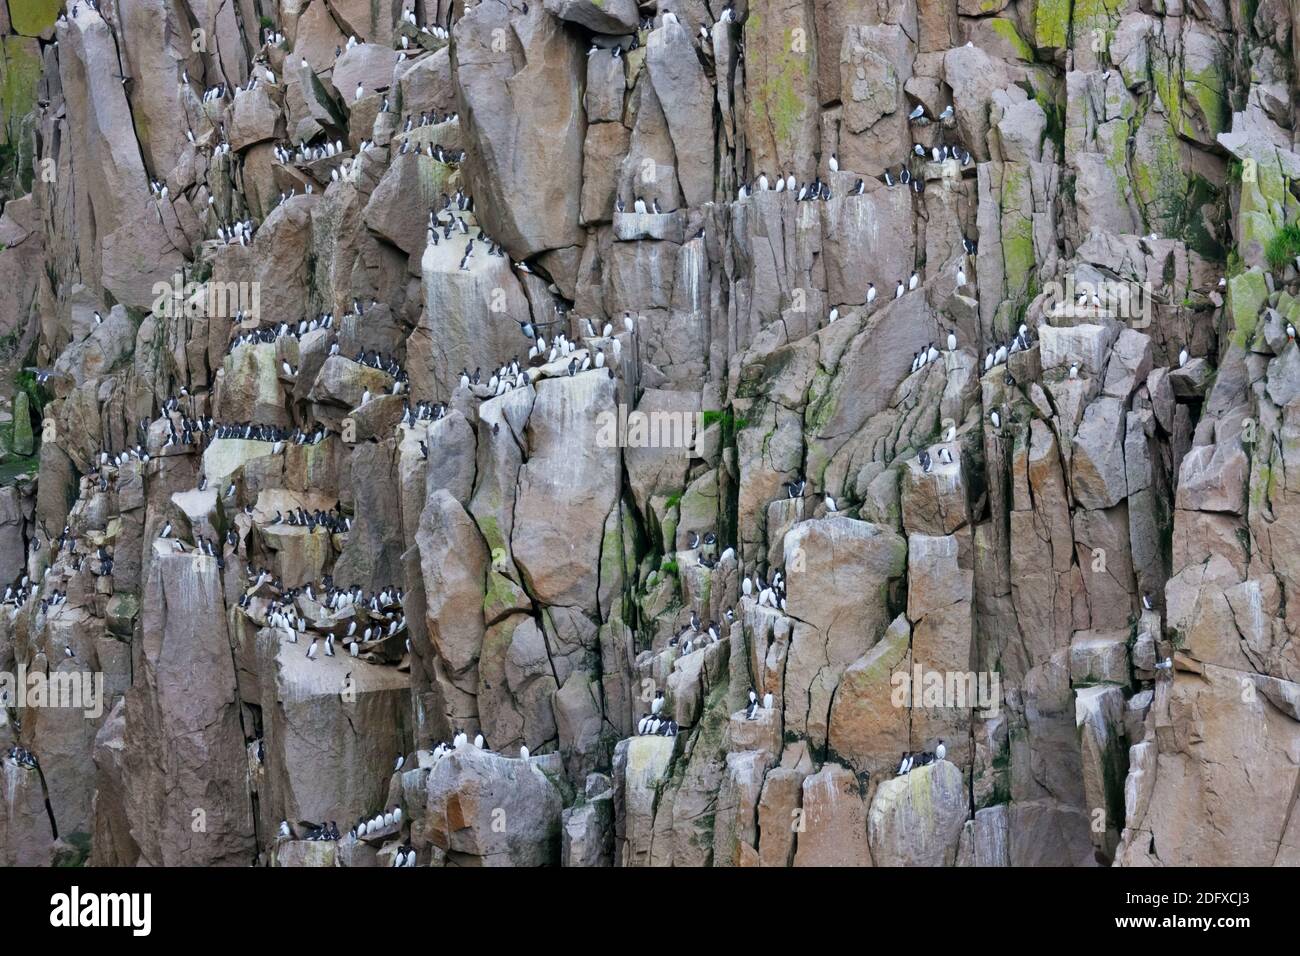 Brunnich's guillemots on the rocky island, Cape Archen, Bering Sea, Russian Far East Stock Photo